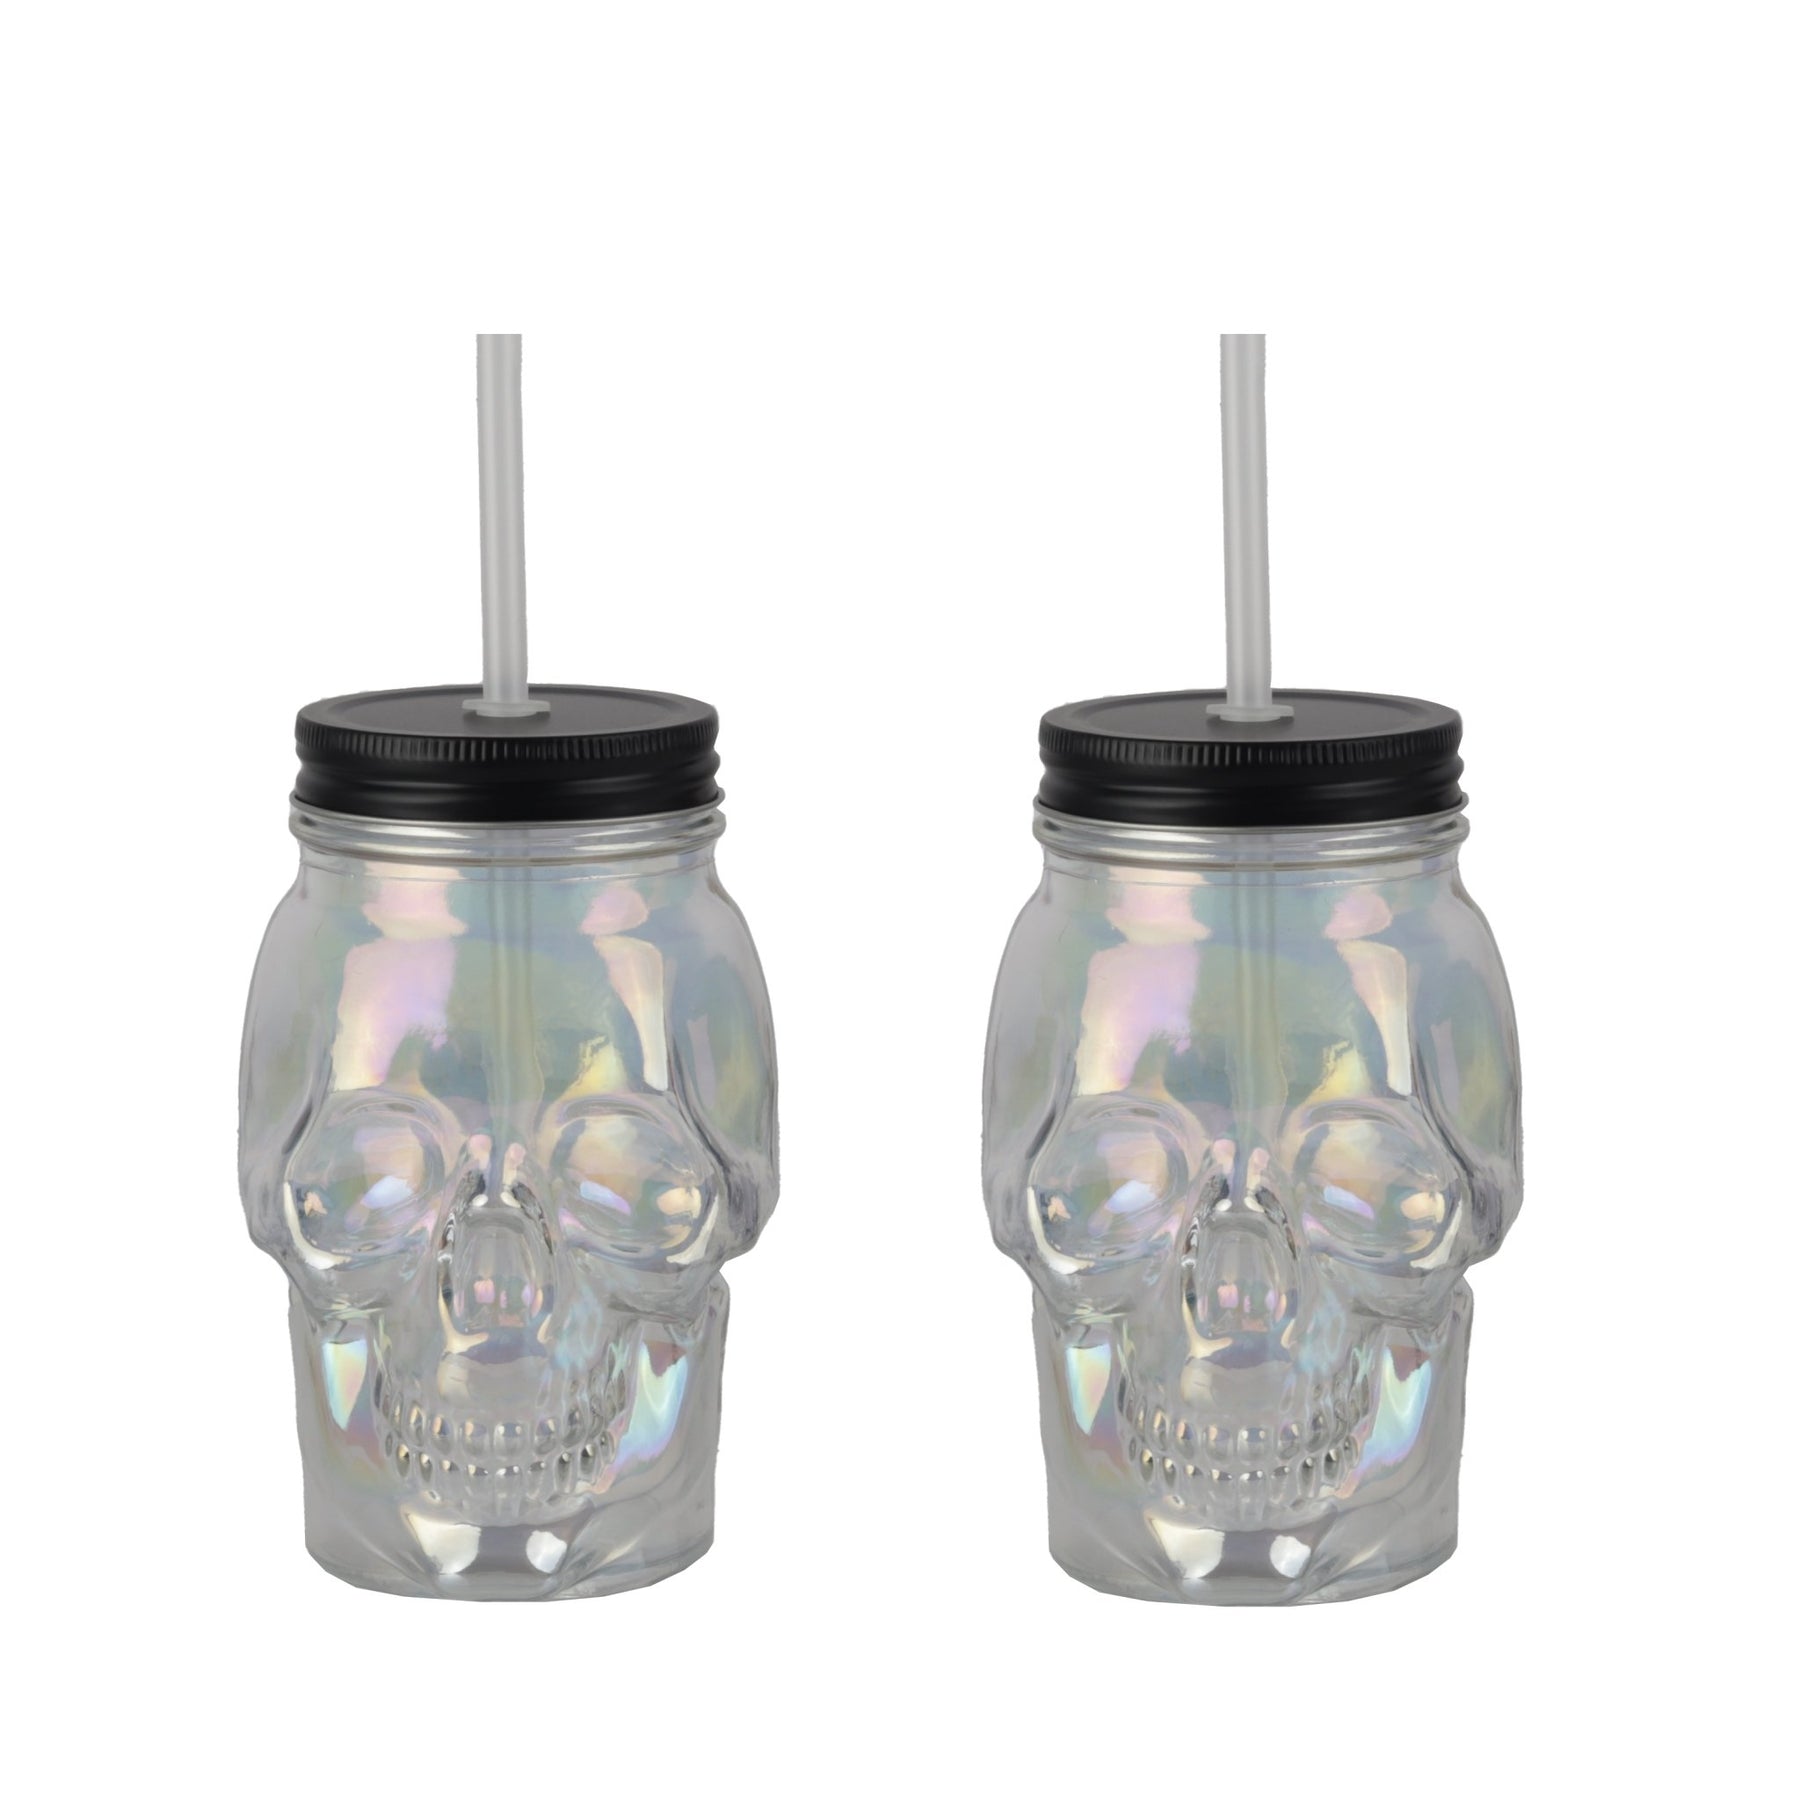 Servette Home Mason Glass Jar Drinking Glasses with Handles & Copper Lid -  Set of 2 